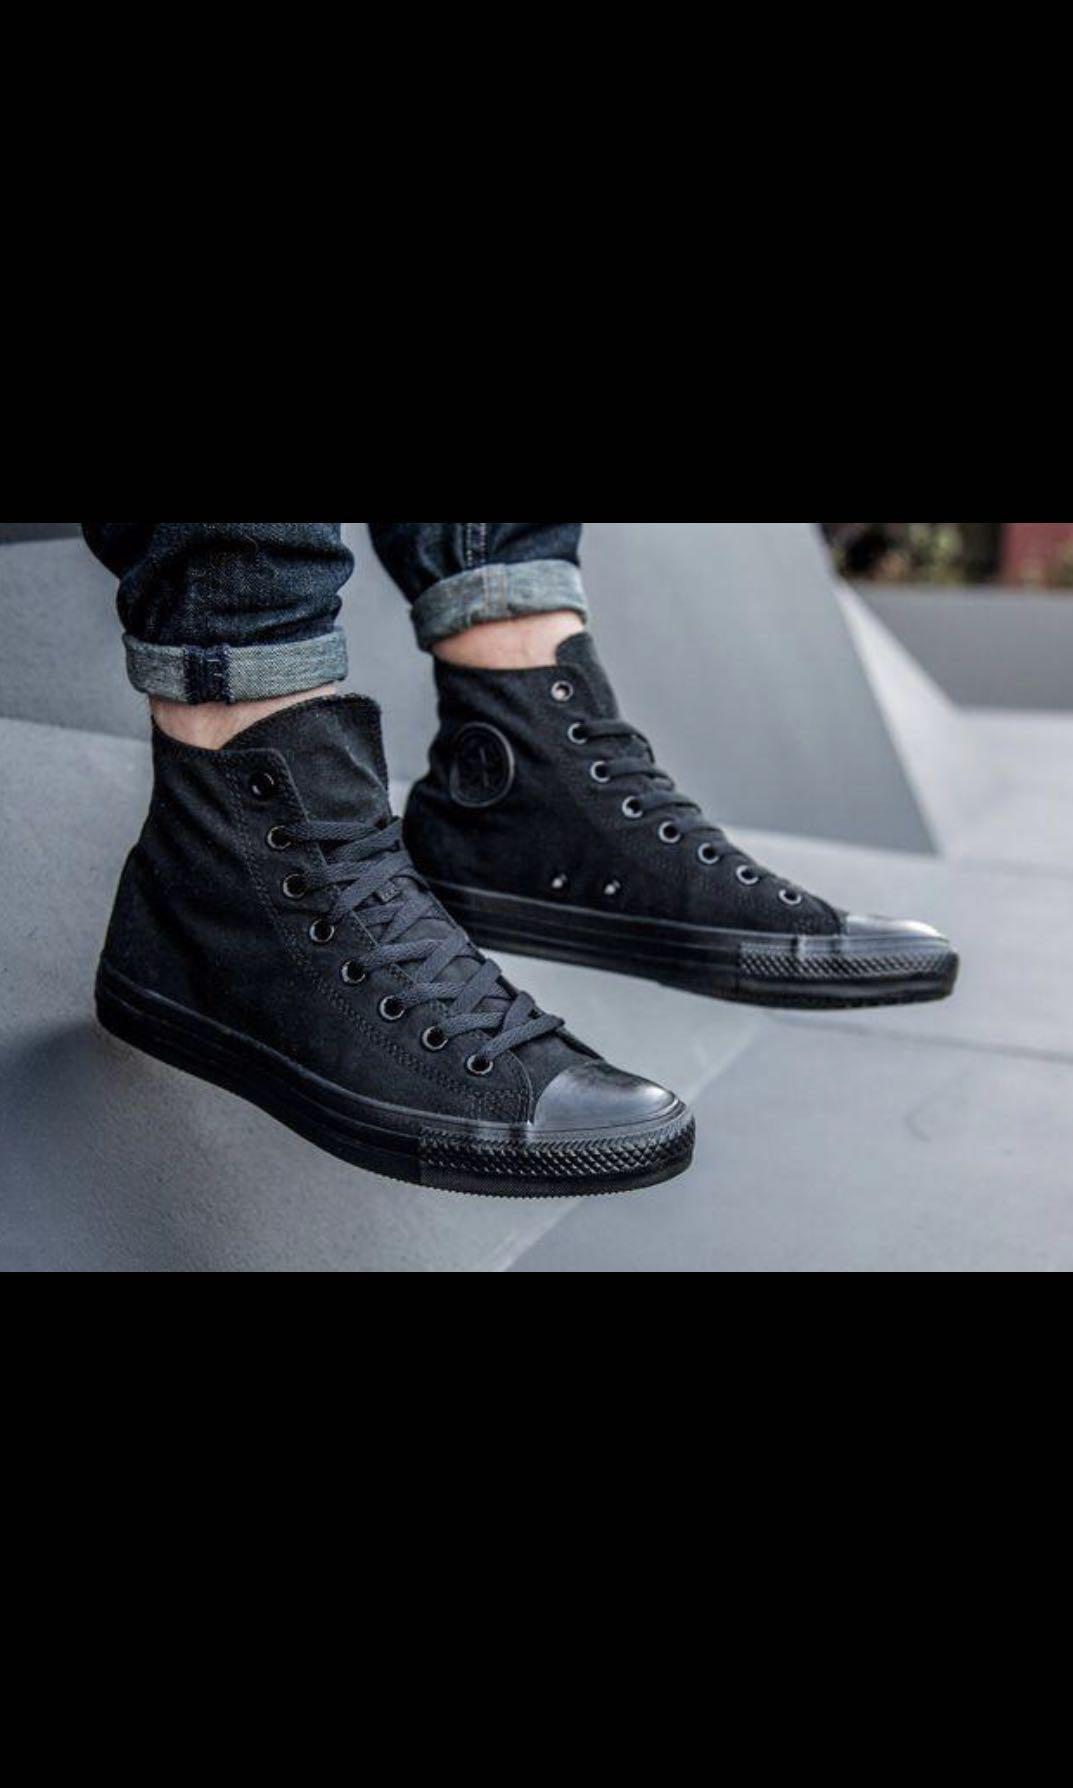 black high cut shoes